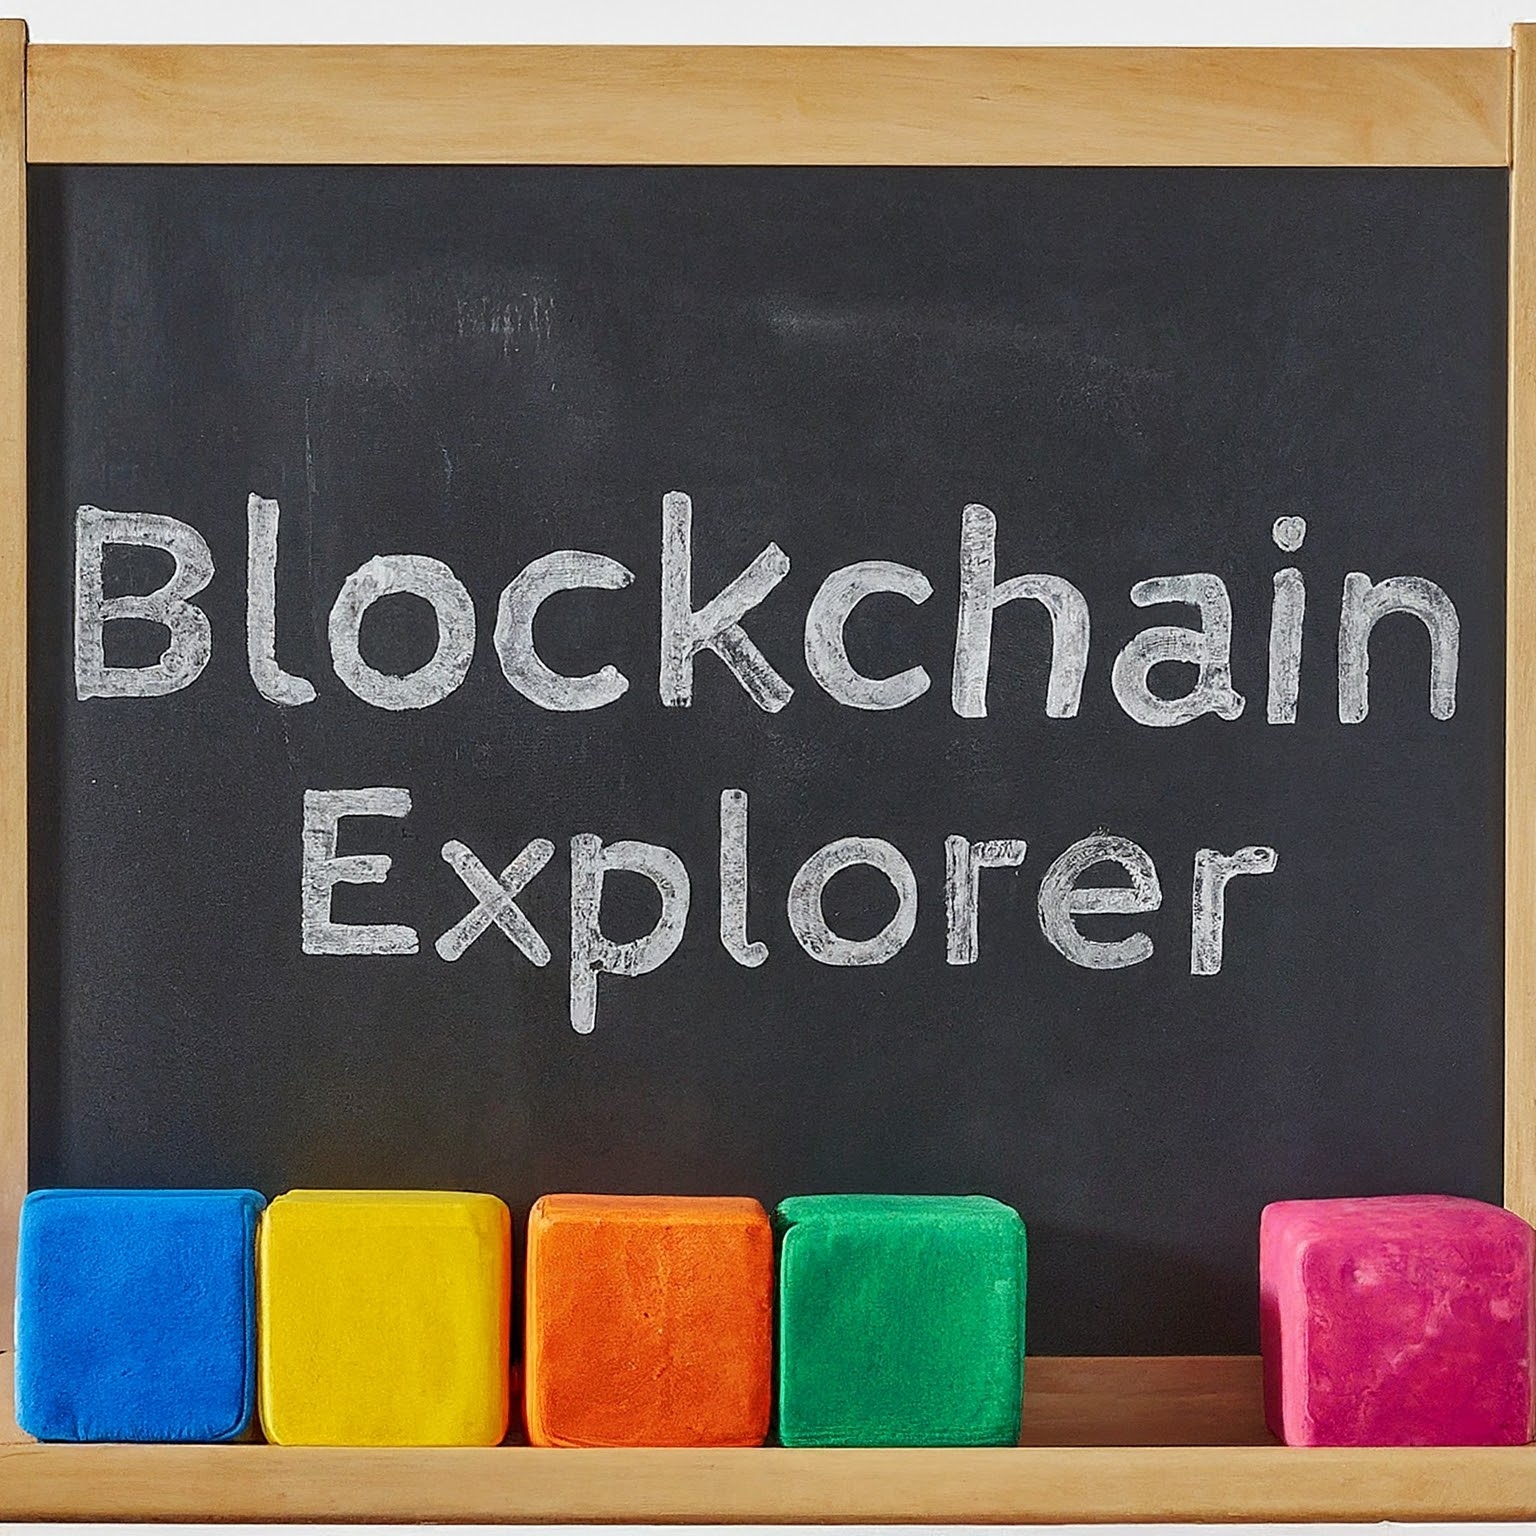 What is a Blockchain Explorer?